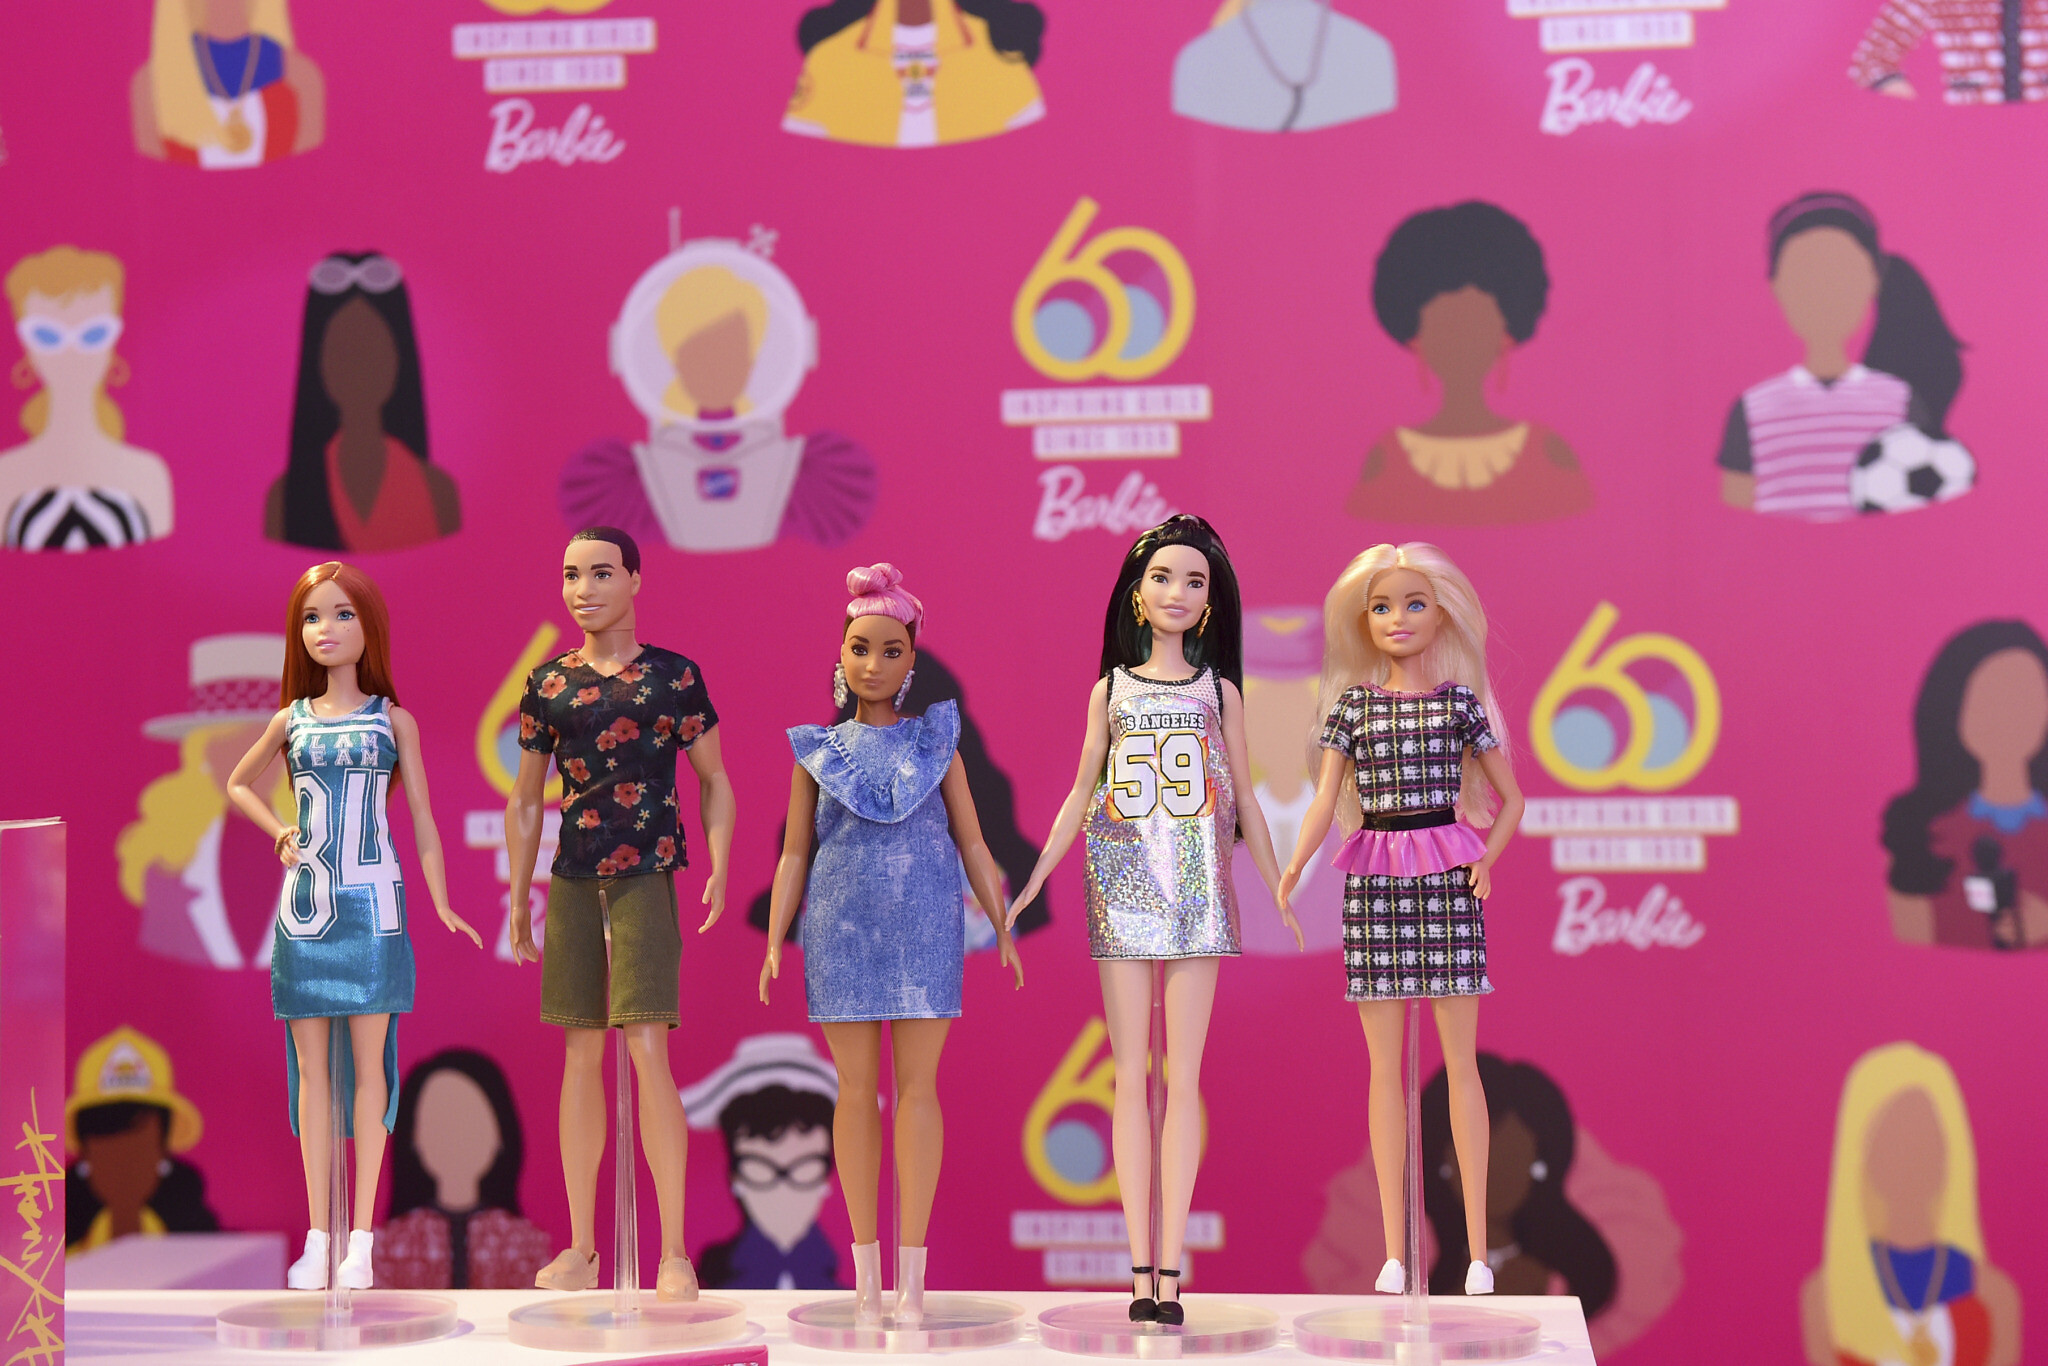 Barbie - Poupée Fashionista Robe Zébrée